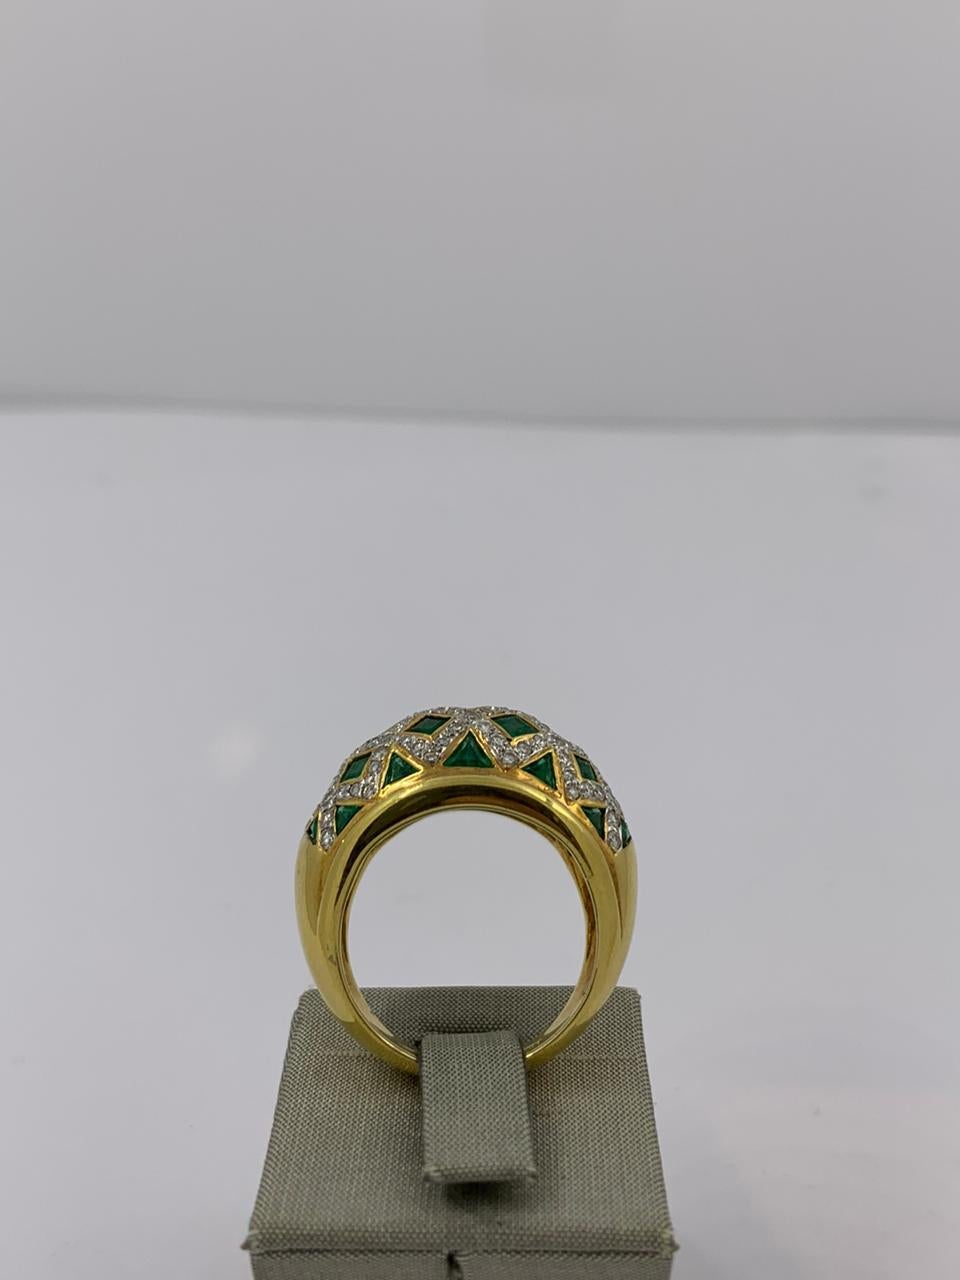 Emerald and Diamond Ring
Diamonds 1.18 ct
Emeralds 4.03 ct
set in 18kt Yellow gold
21-11437